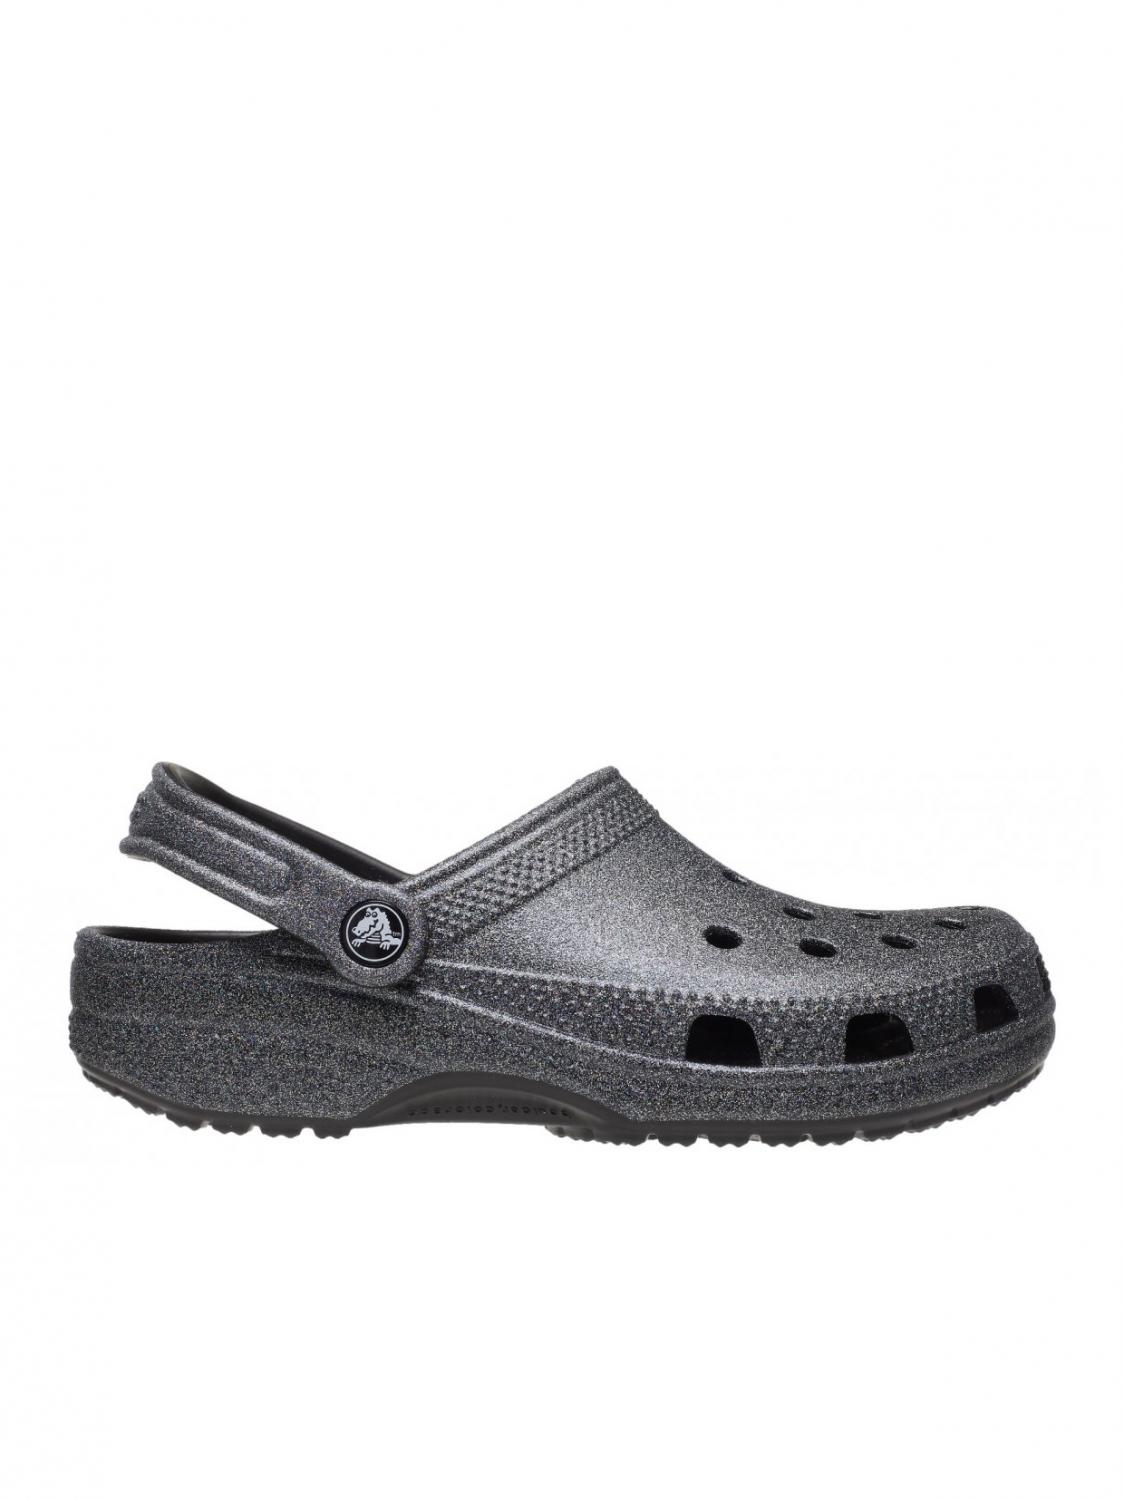 Crocs Classic Glitter Ii Clog W Sabot Sandal Black - Buy At Outlet Prices!